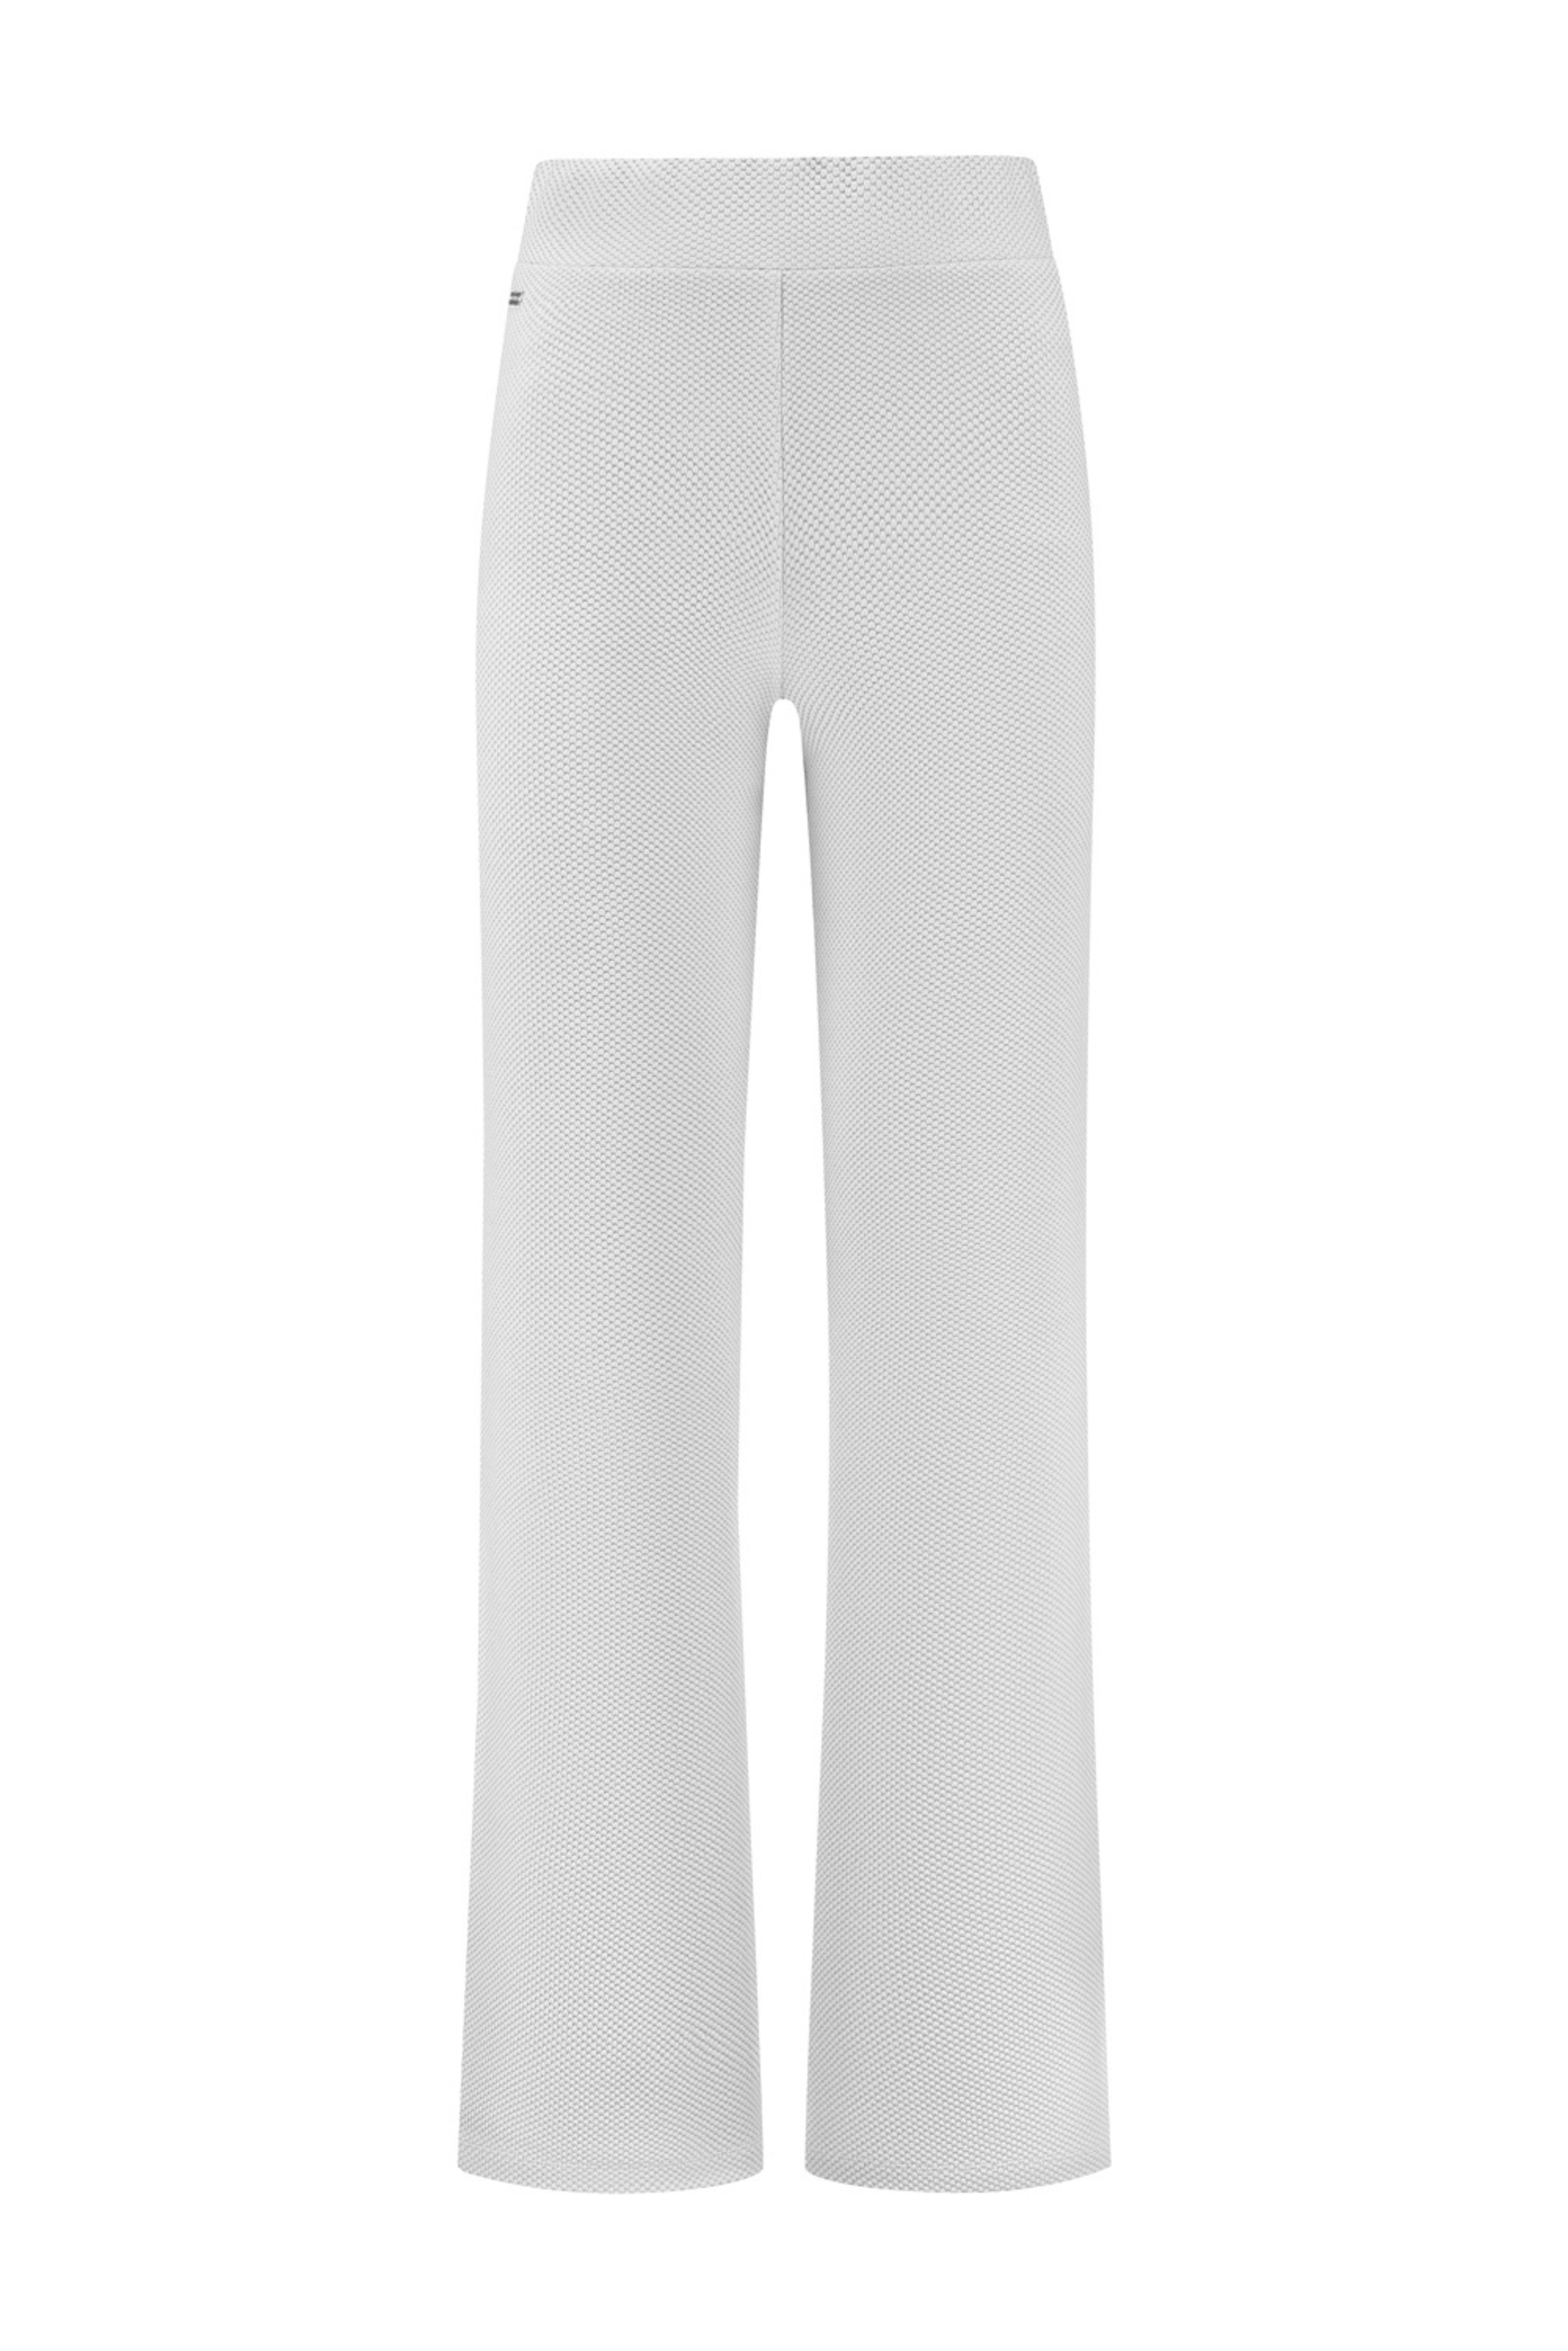 MOON CLASSIC flared pants - Mirage Grey